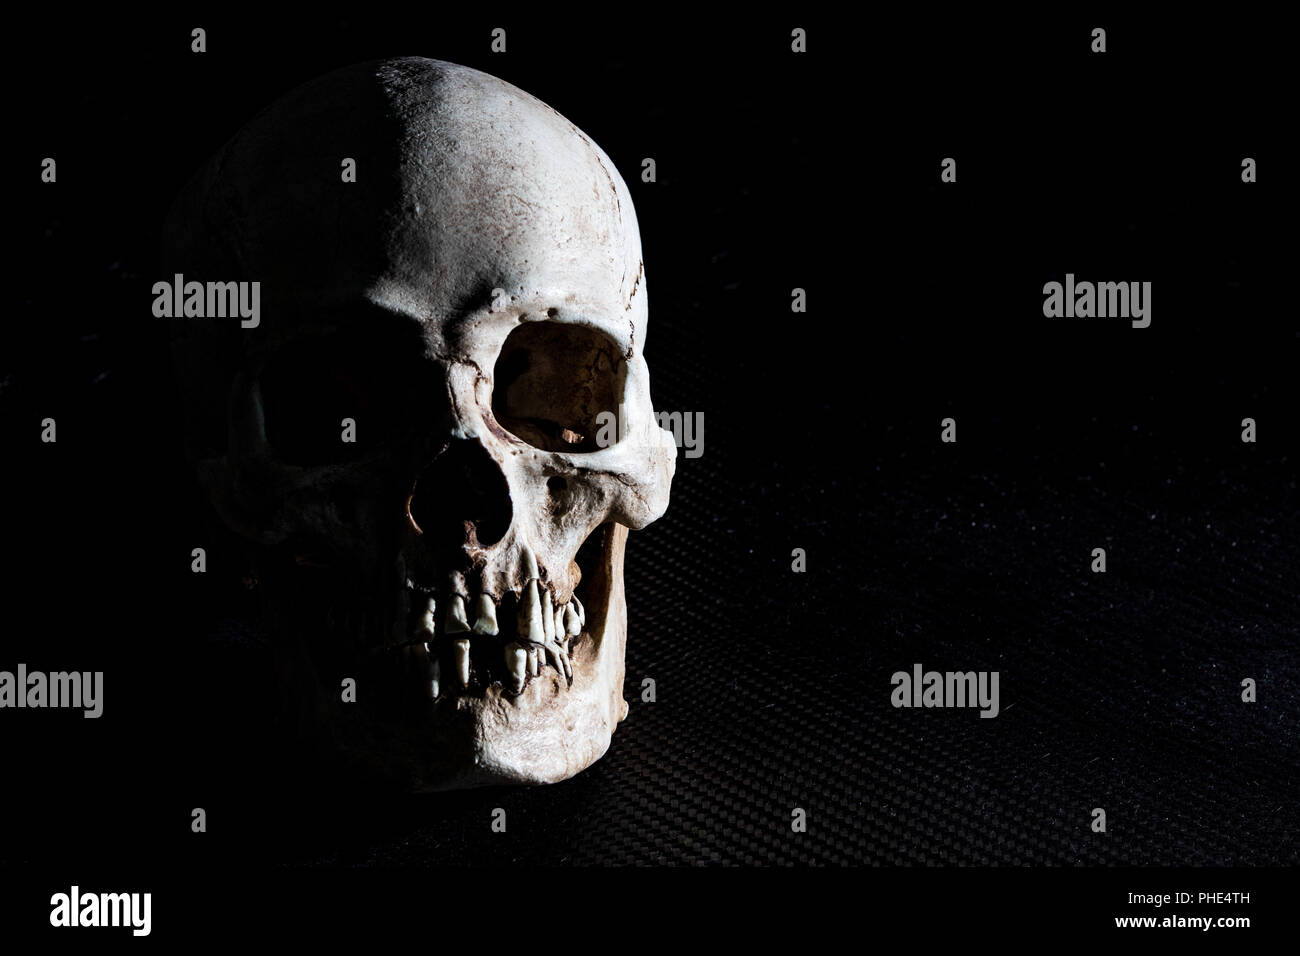 Human skeleton skull head isolated on black Stock Photo